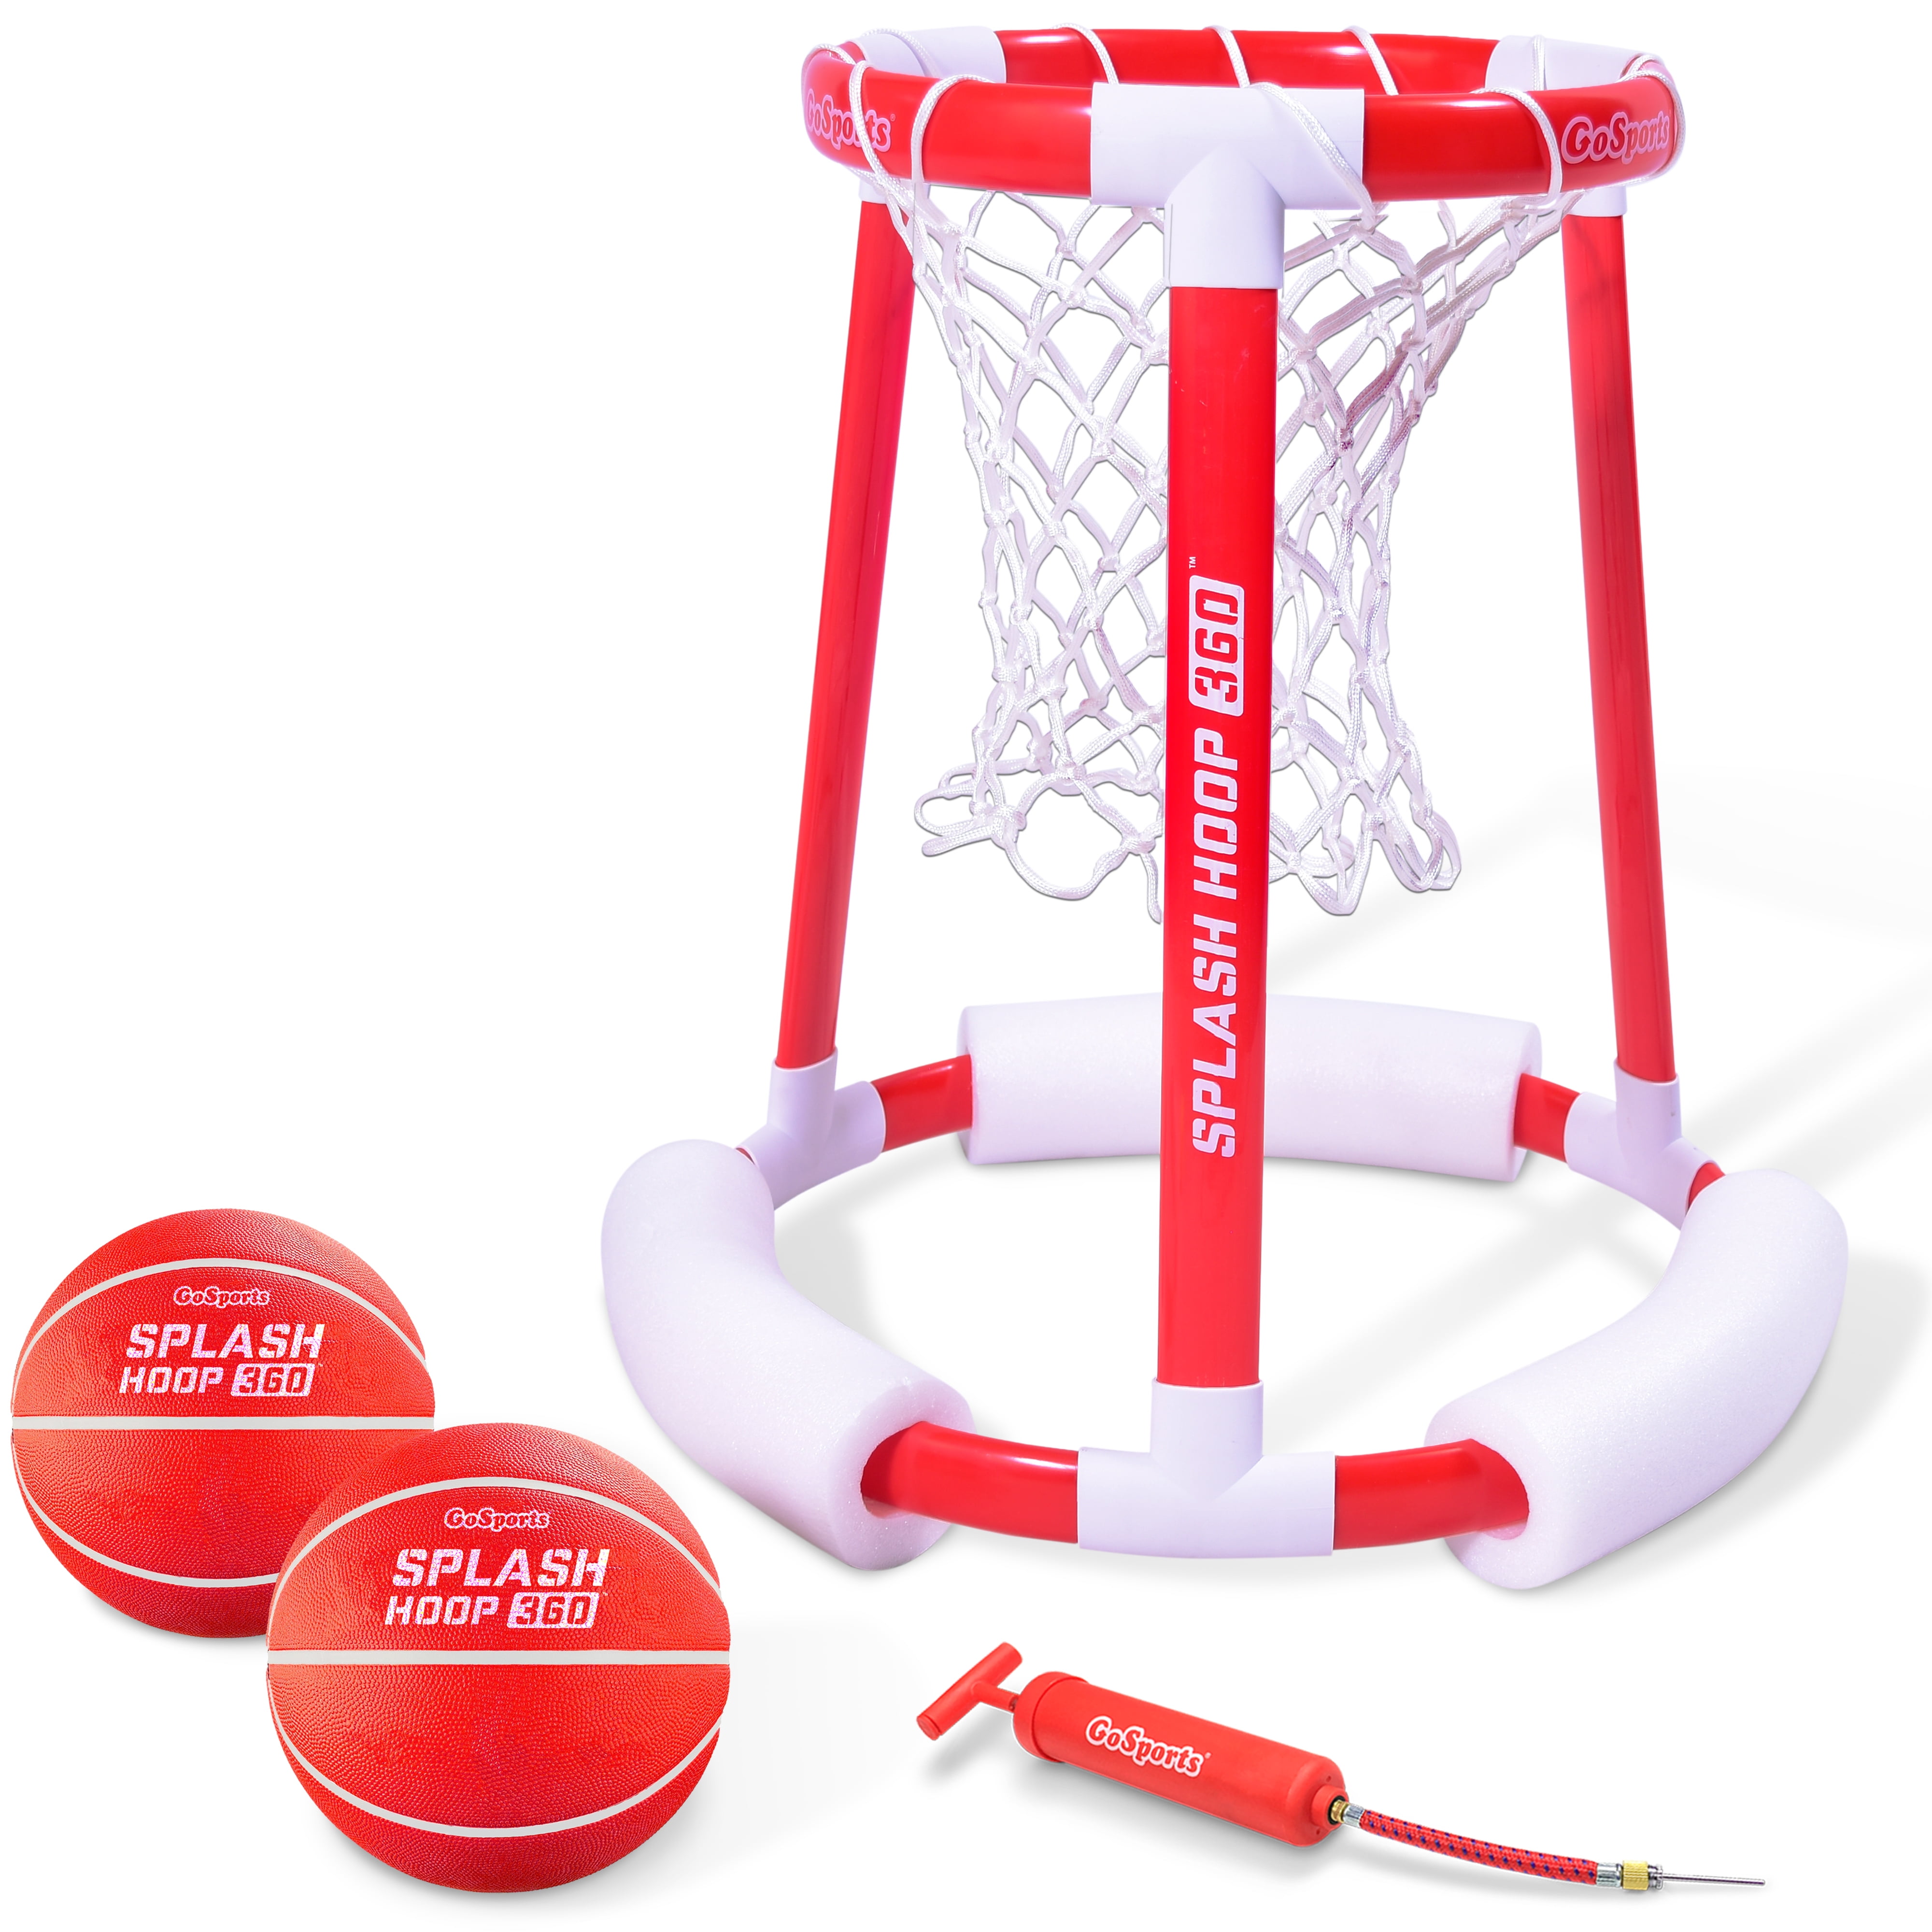 Fridja Pool Floats Toys Games Set - Floating Basketball Hoop